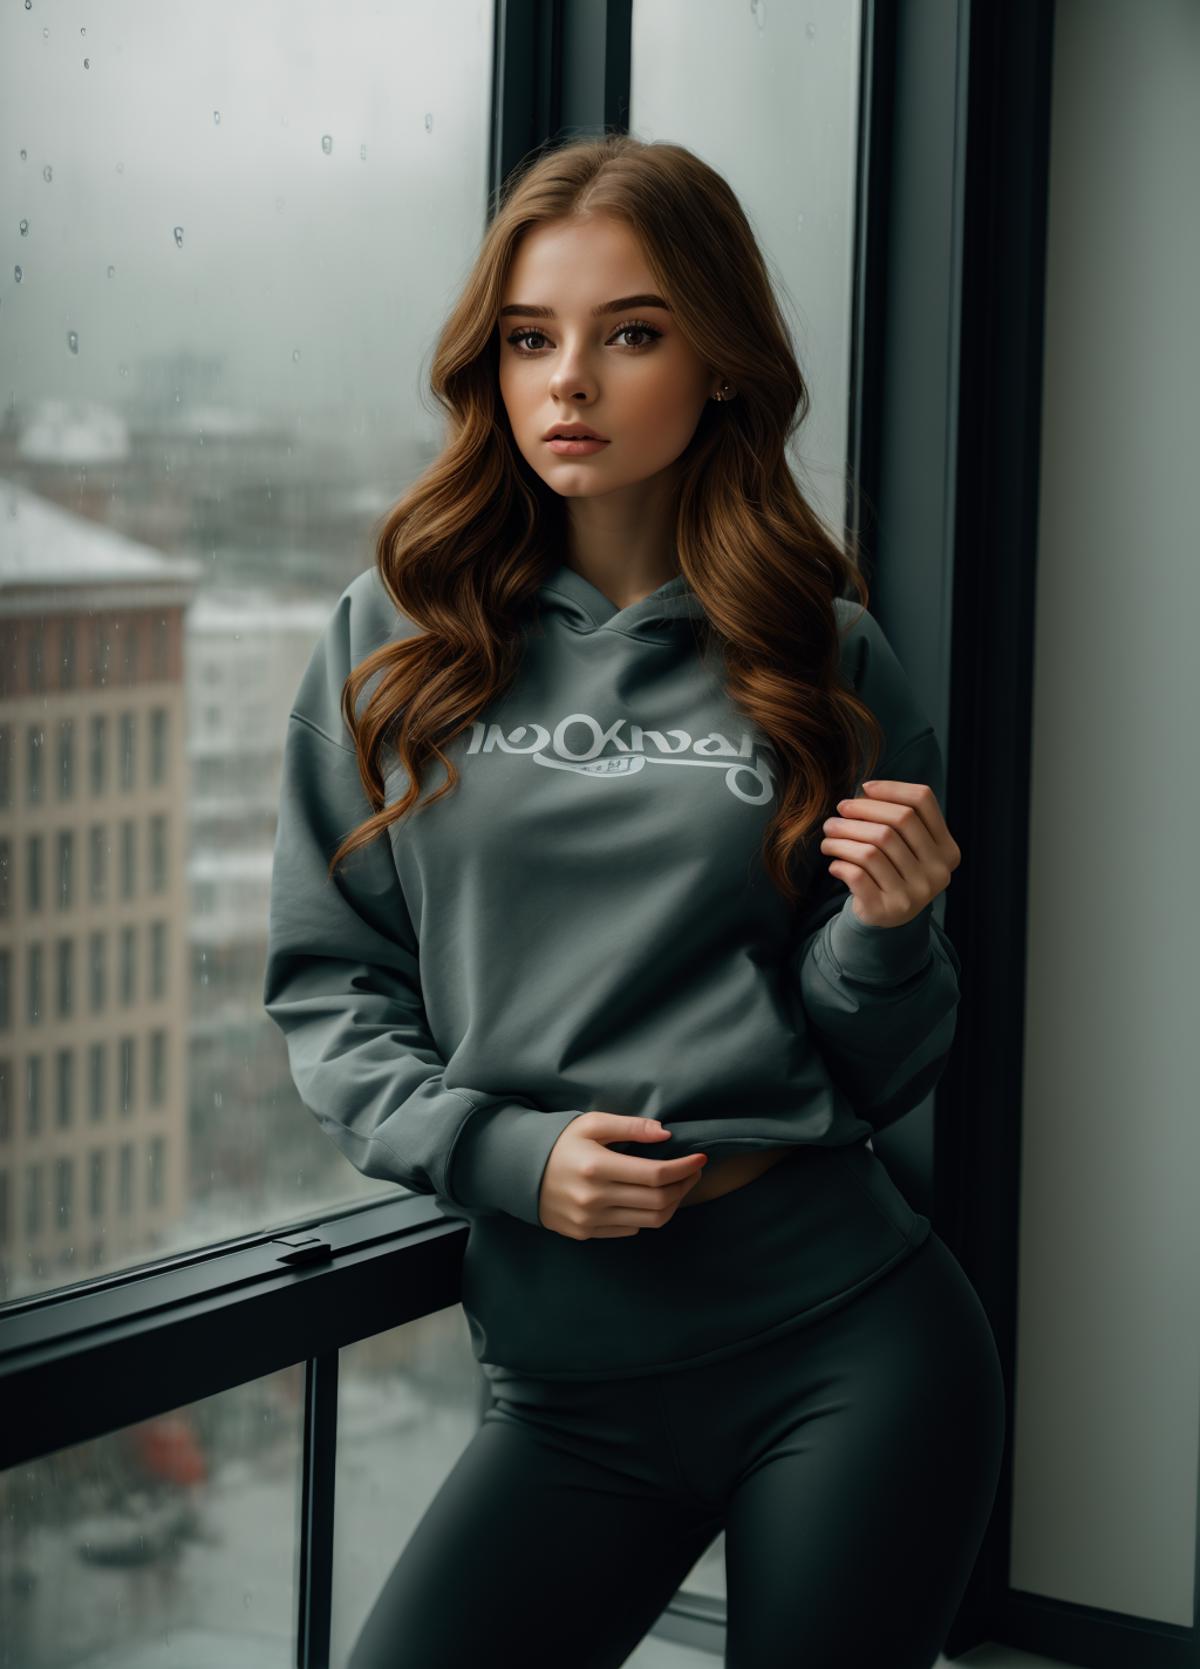 Aleksandra Girskaya (Model) image by WillieF